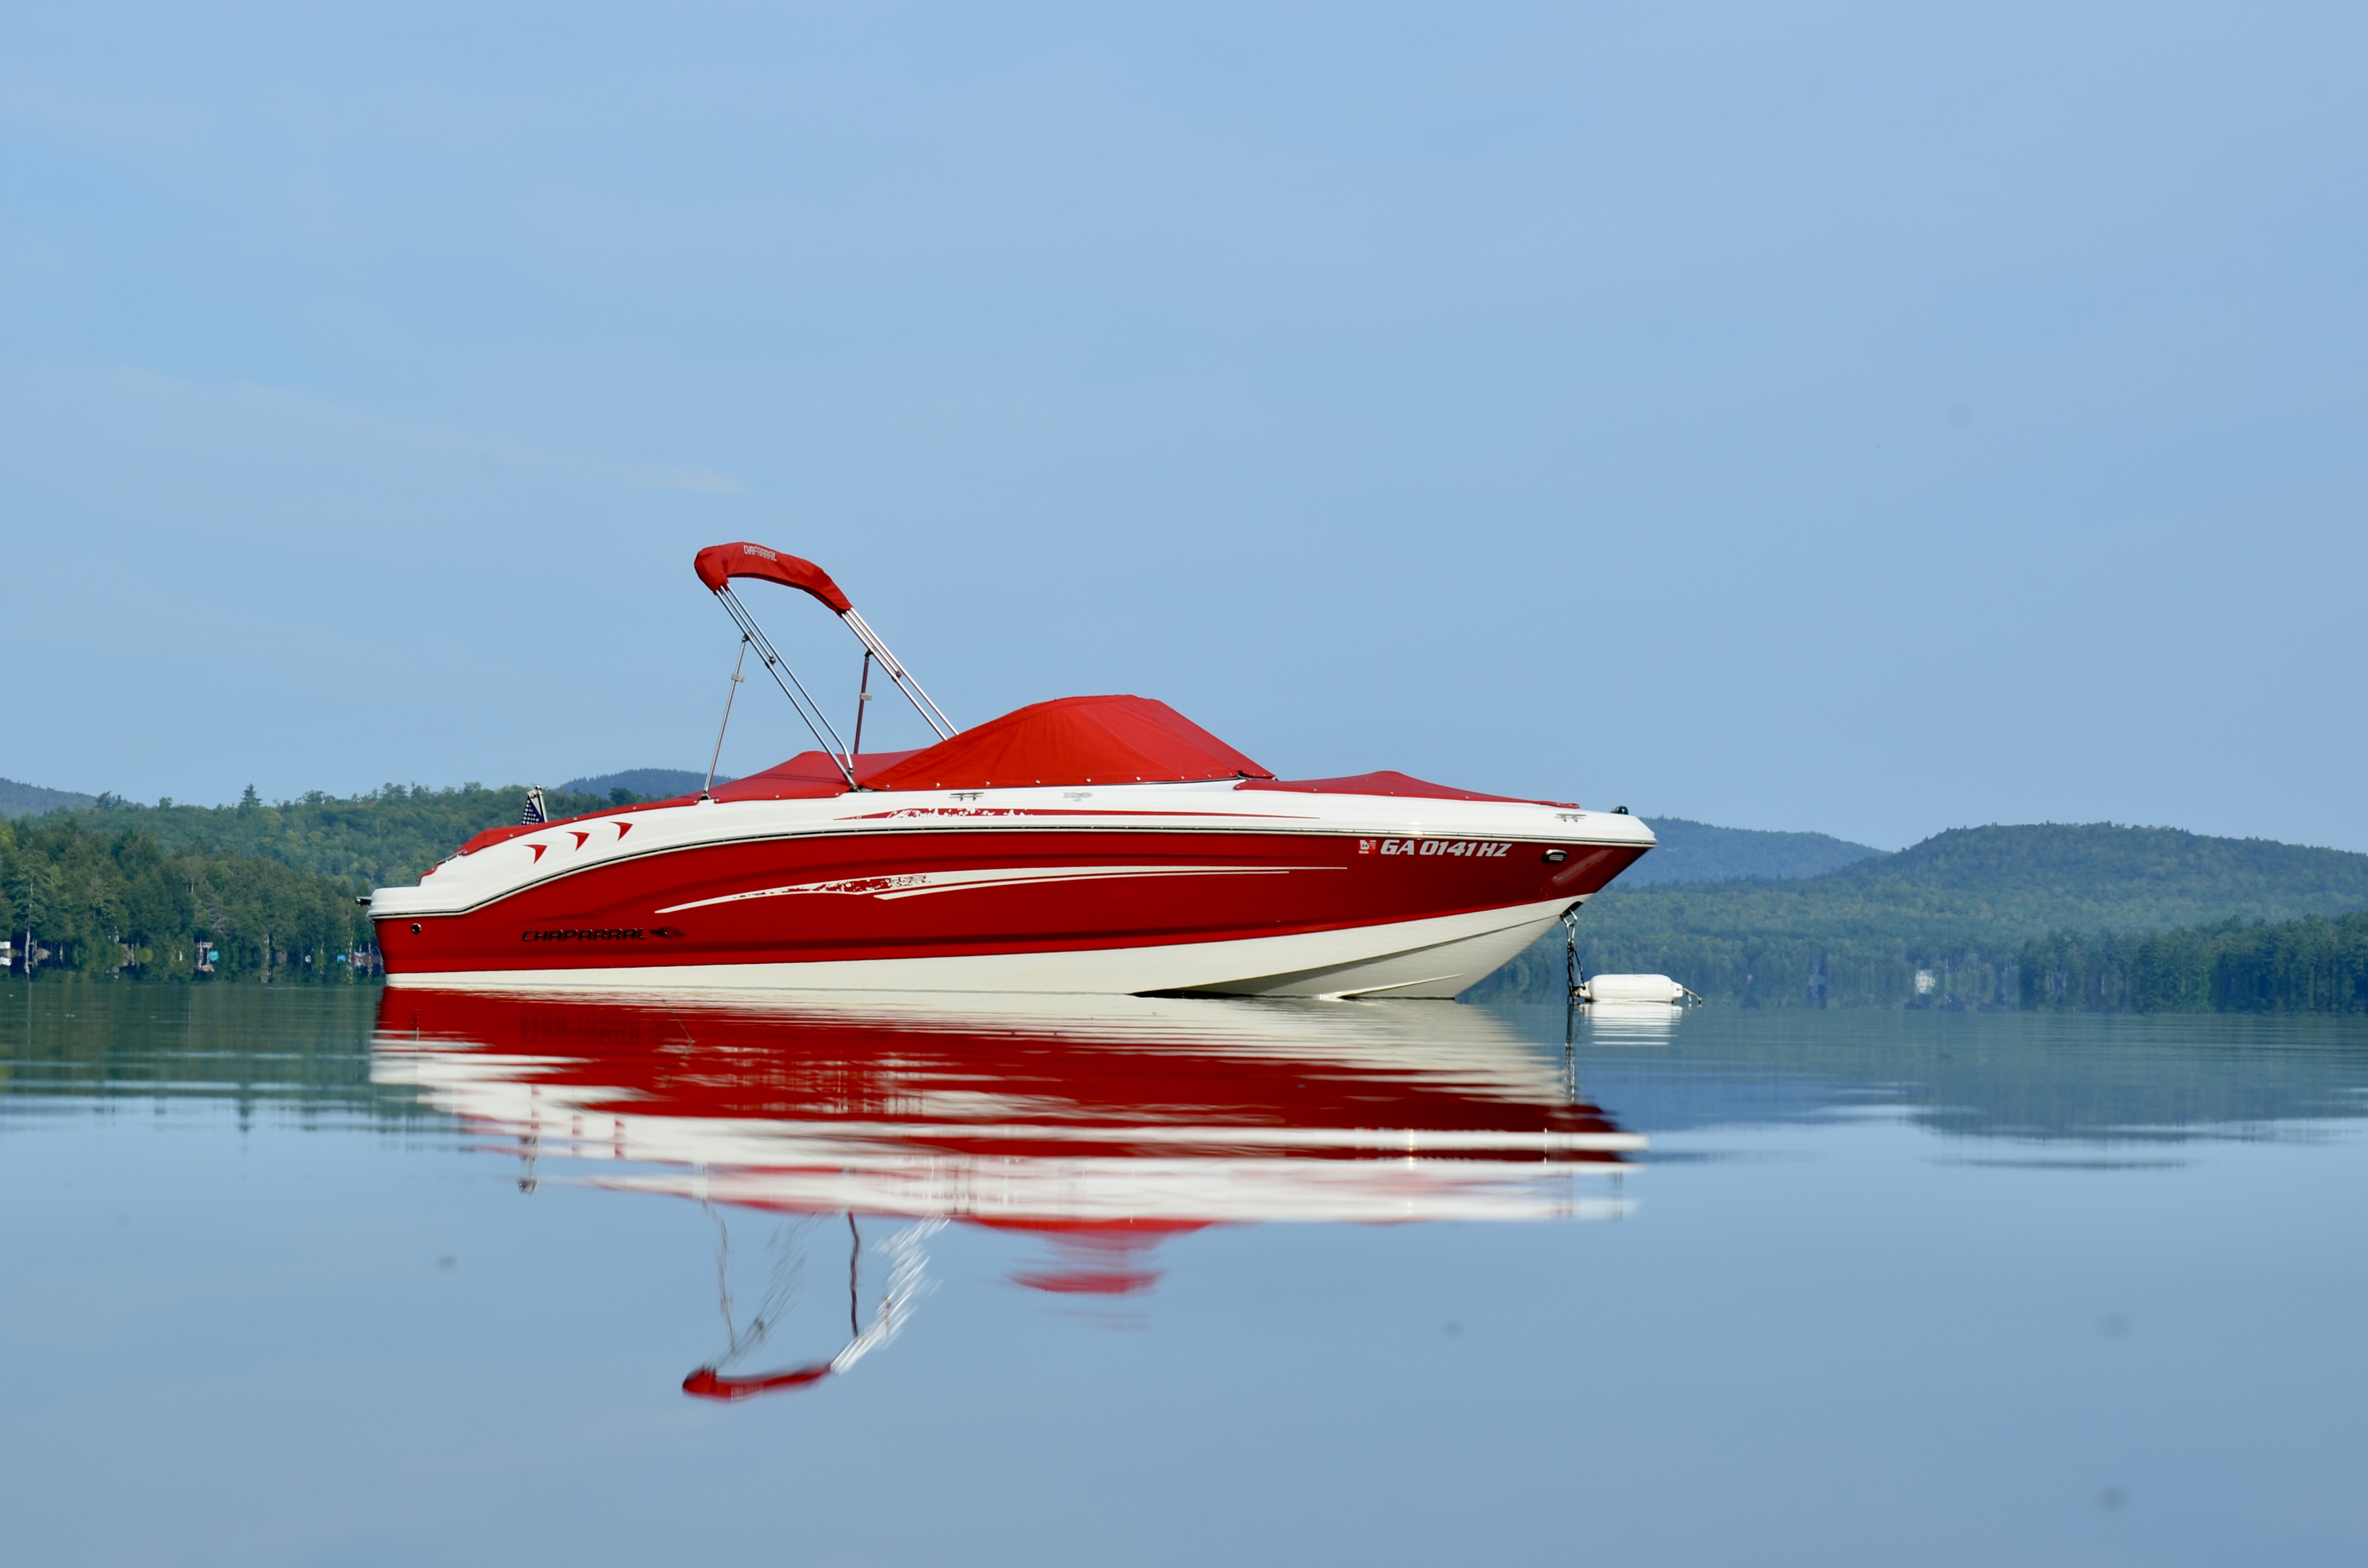 2014 Chaparral H20 19 Power boat for sale in Lake Ridge, VA - image 1 